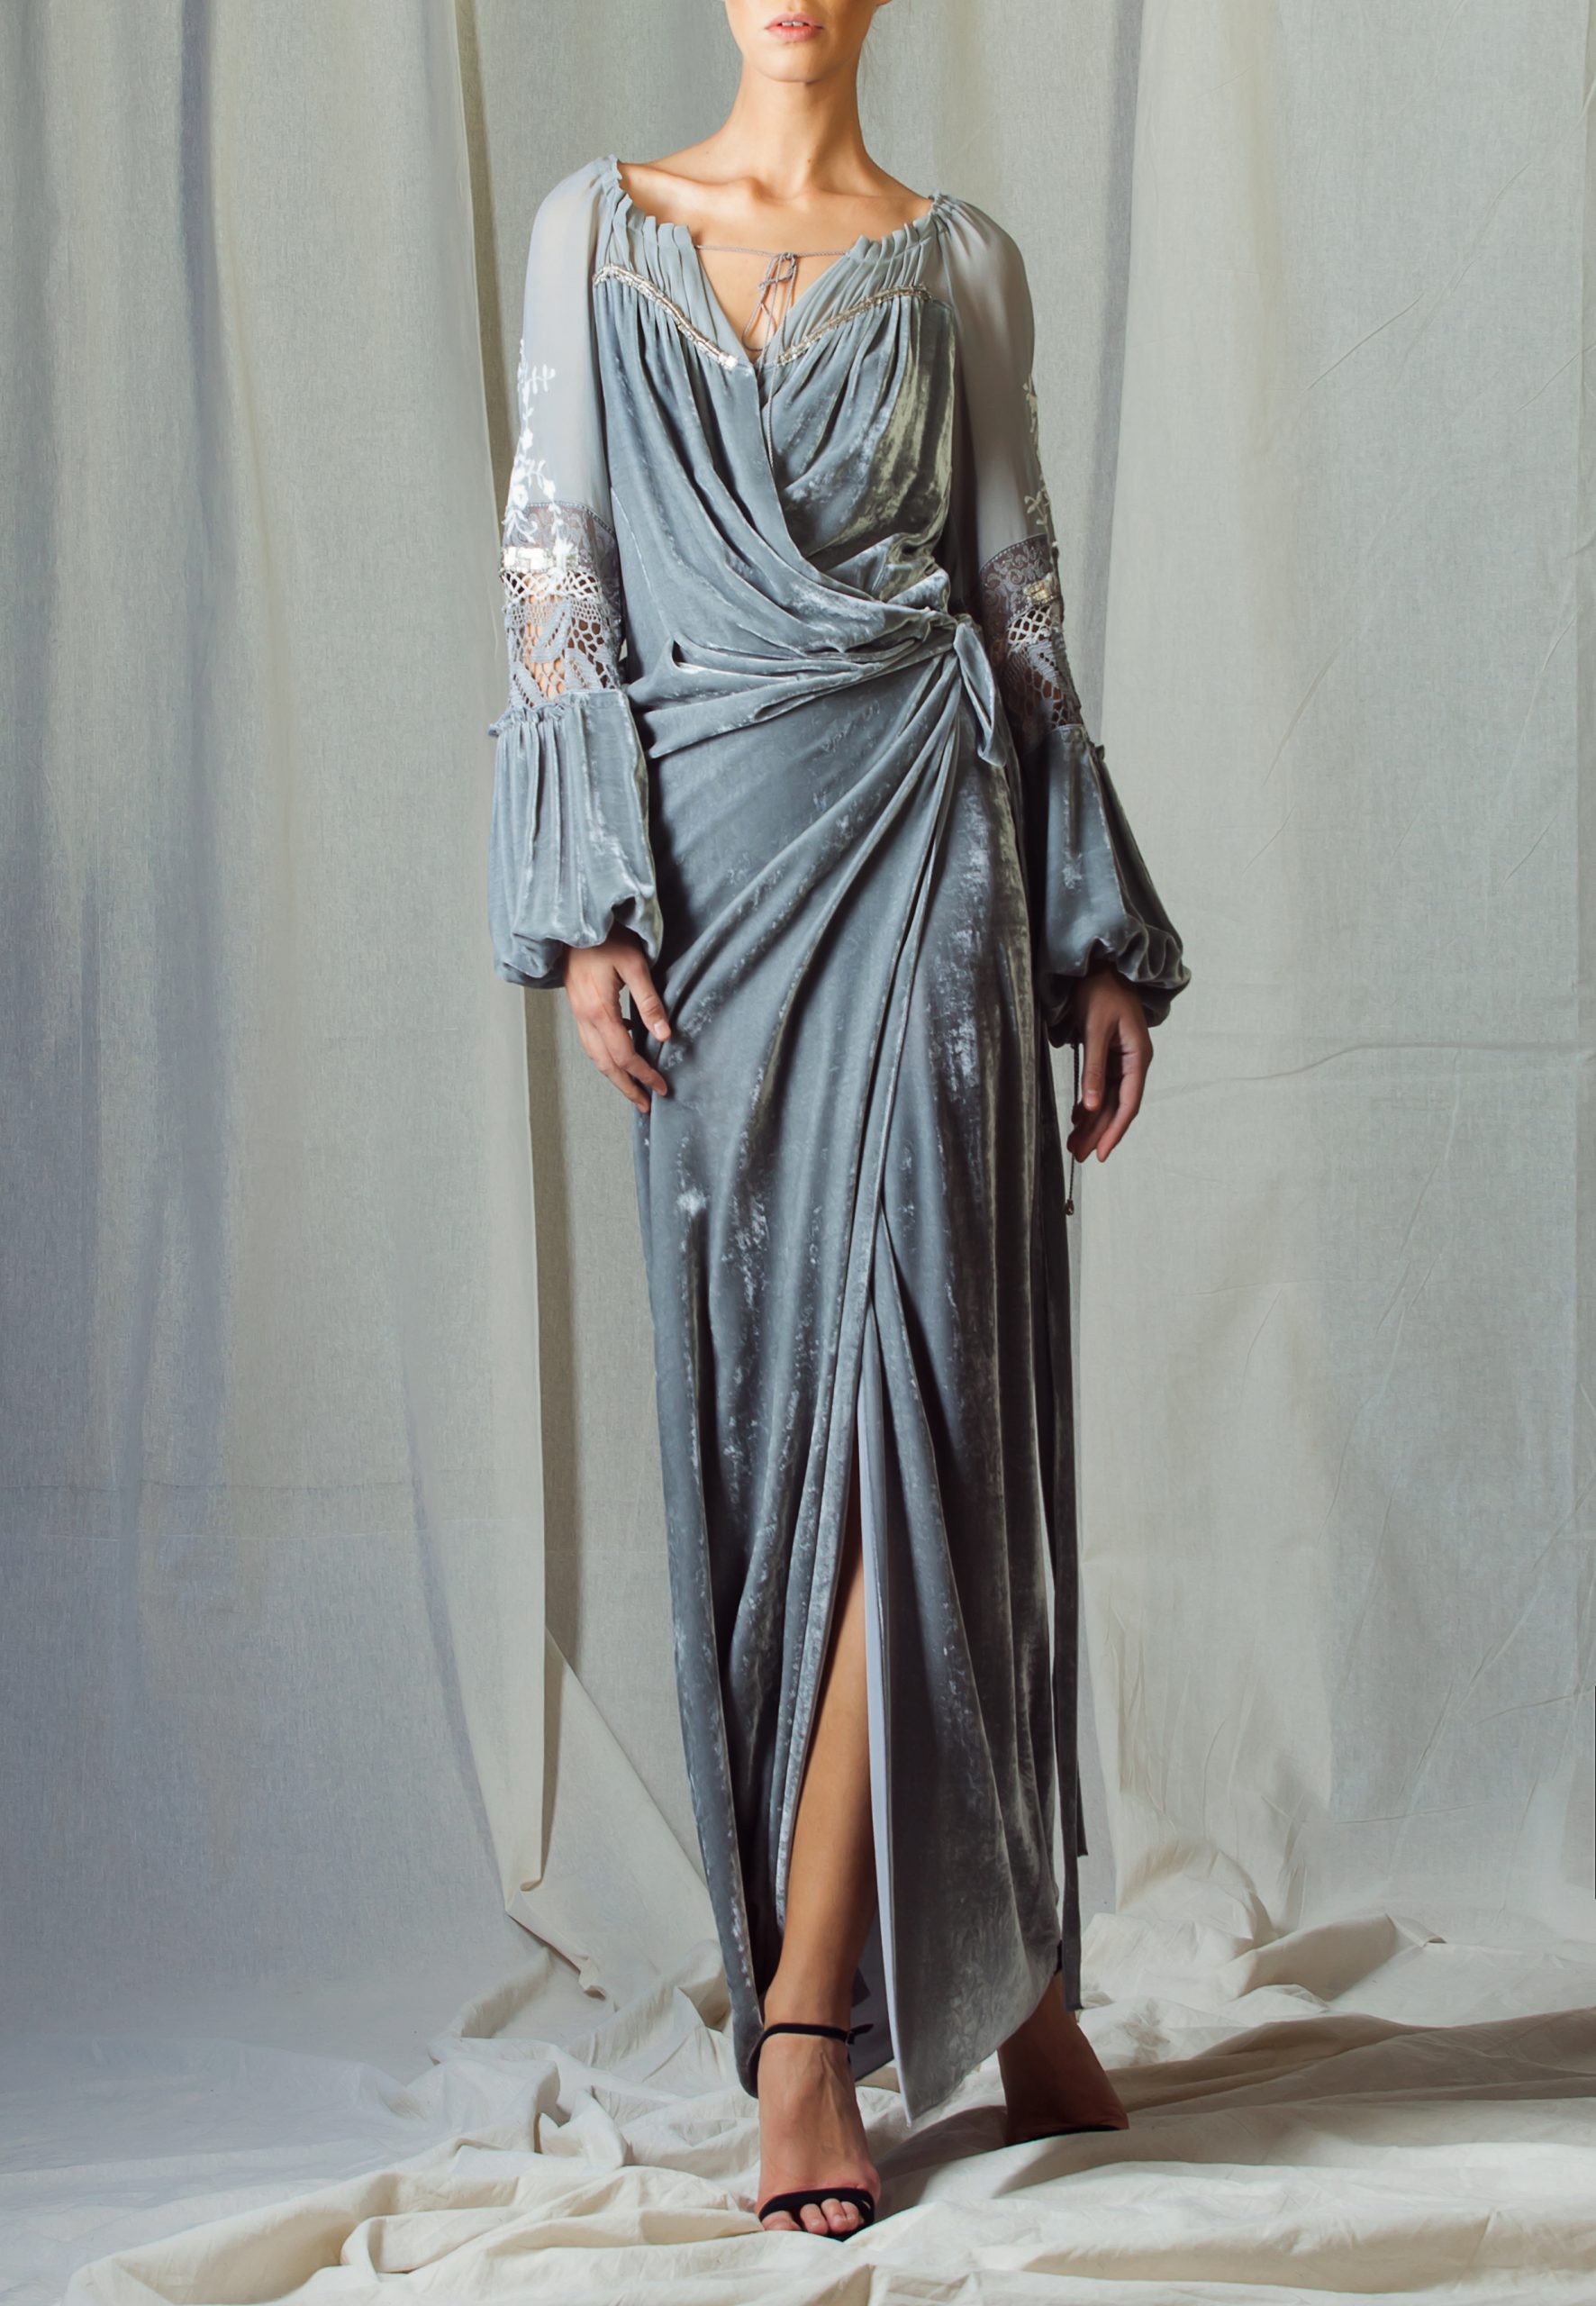 Bleu Velour dress with lace